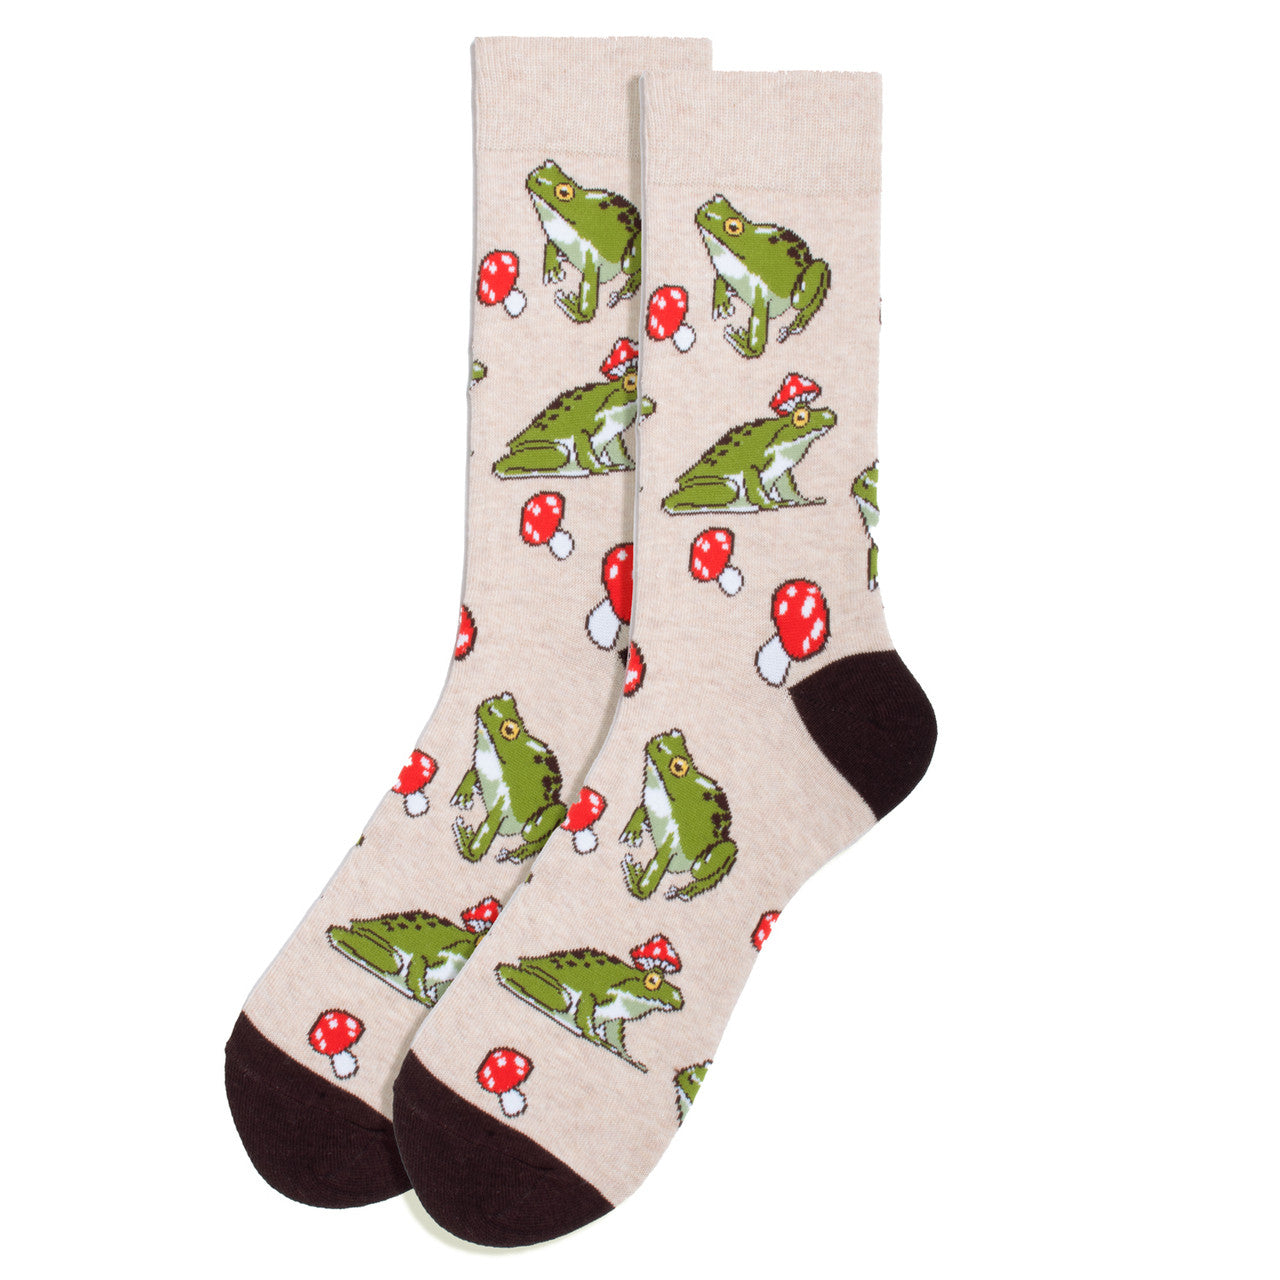 Prince Charming Socks Novelty Sock Funny Socks Frog Mushroom Theme Socks Fun Gifts Mens Socks Funny Groomsmen Socks